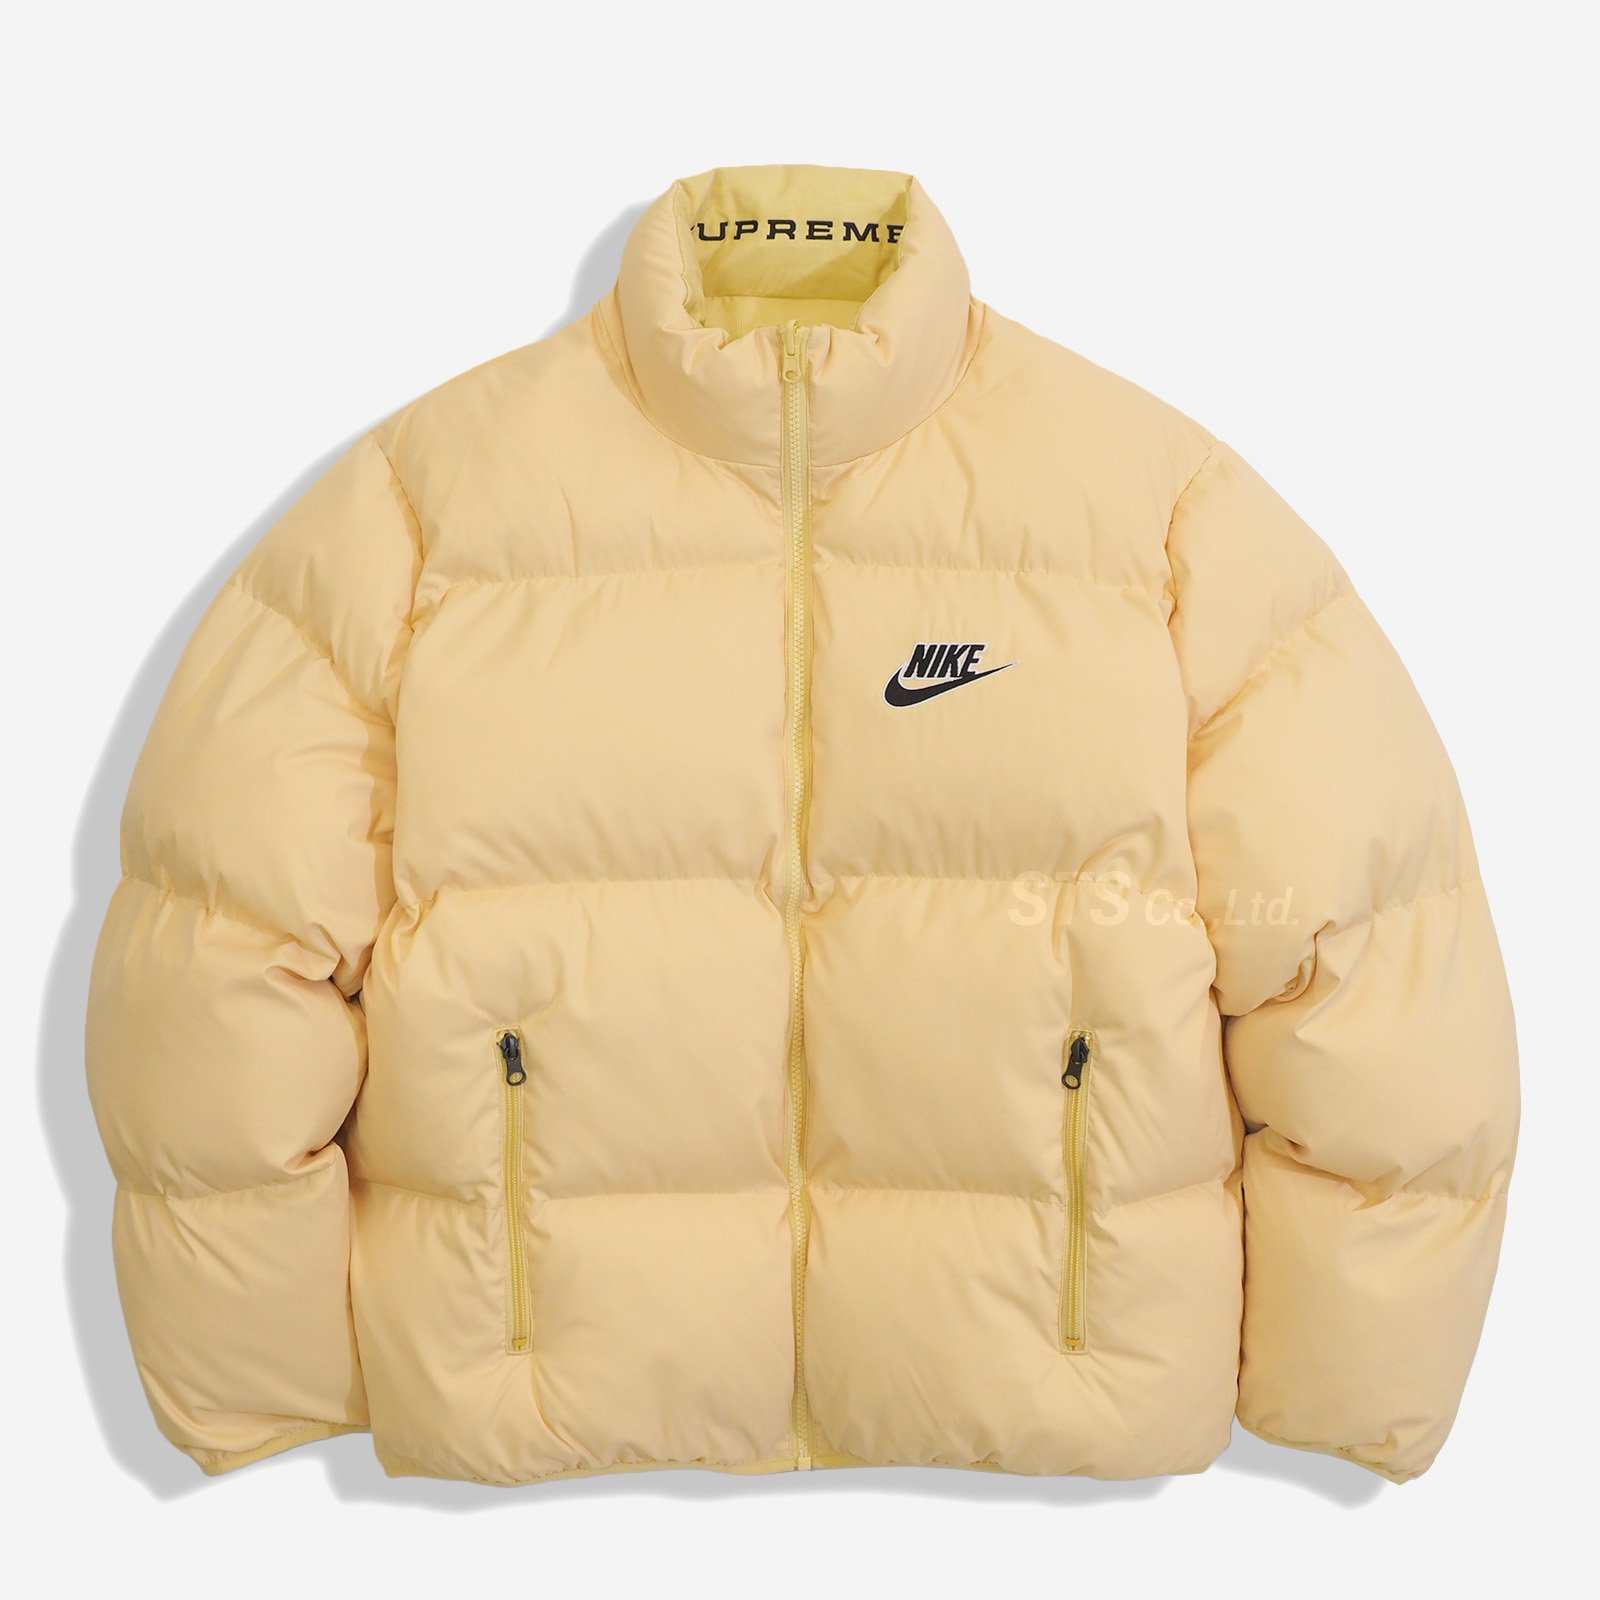 supreme nike puffy jacket XL